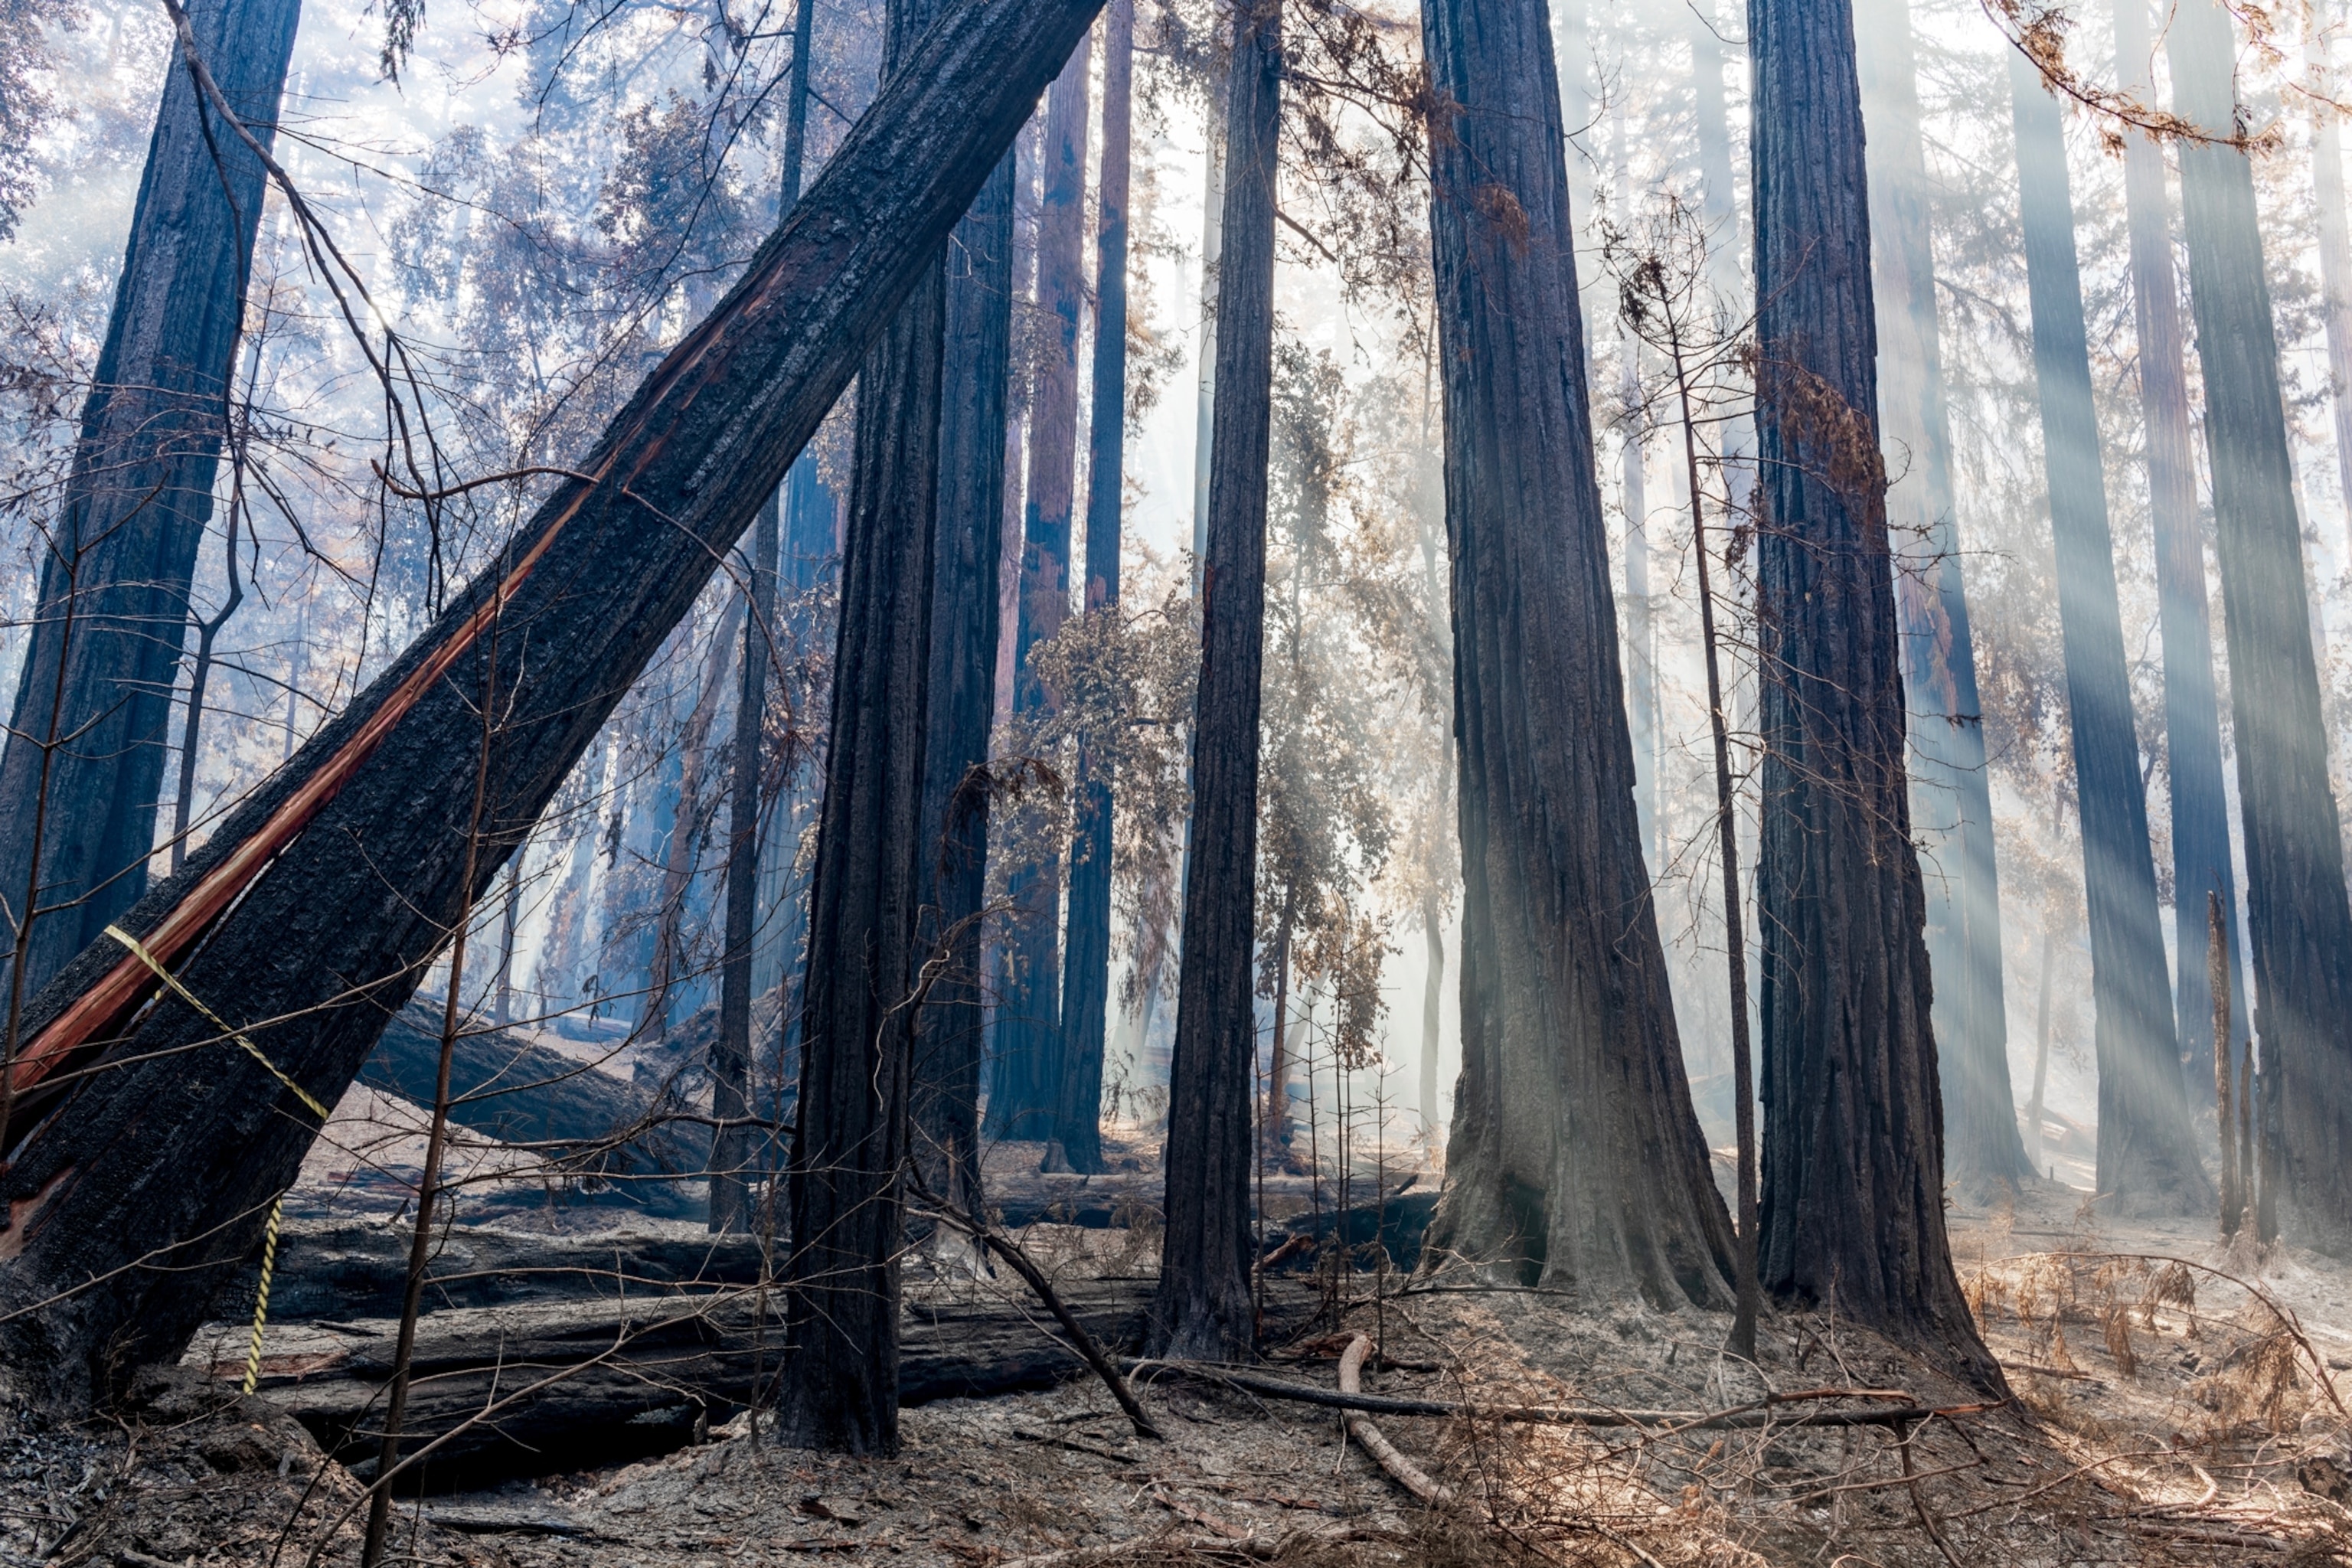 Saving California's redwoods, Giant sequoia wonder, Nature's beauty, Environmental activism, 3080x2050 HD Desktop